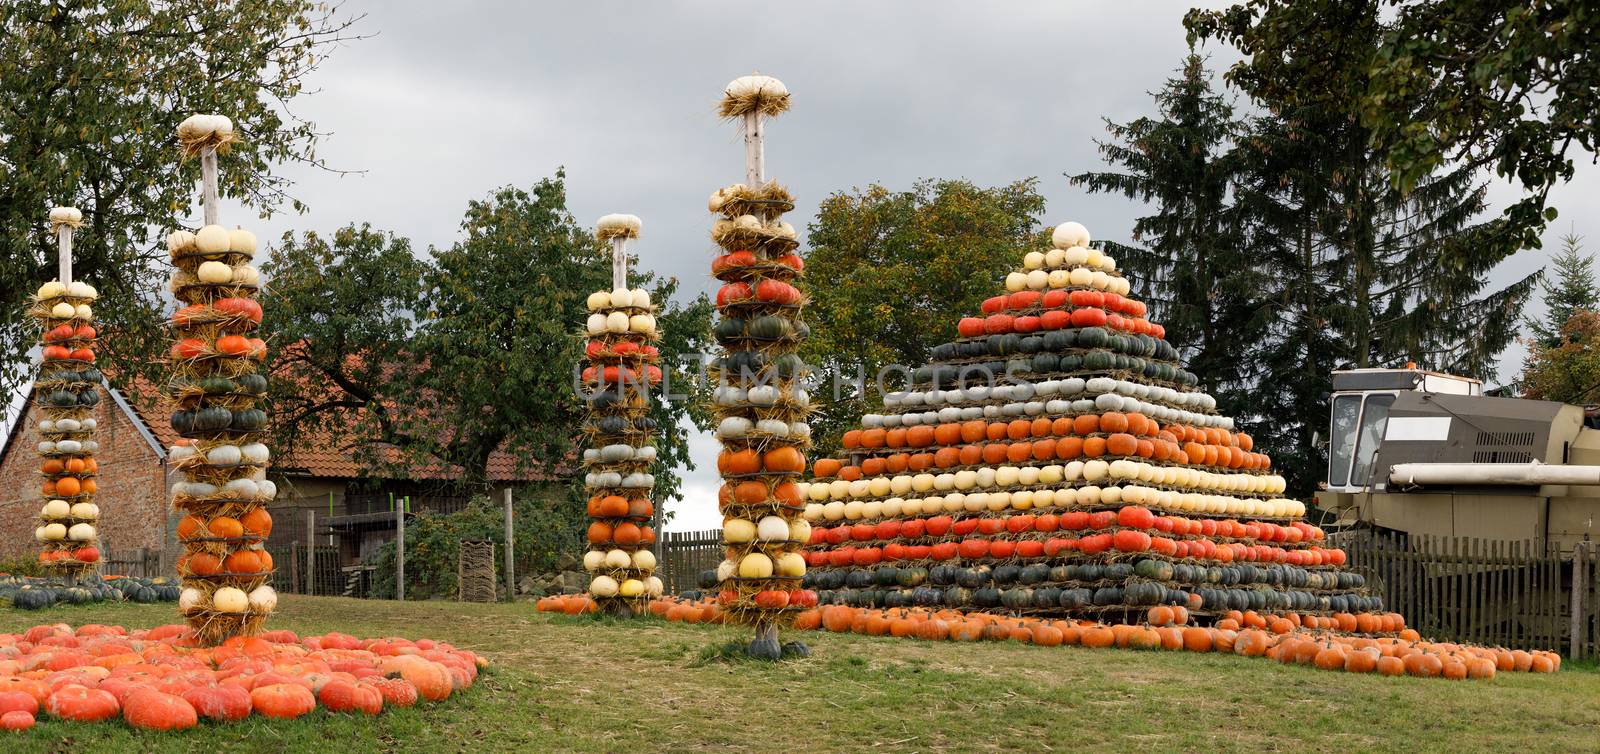 Autumn harvested pumpkins arranged for fun like pyramid by artush